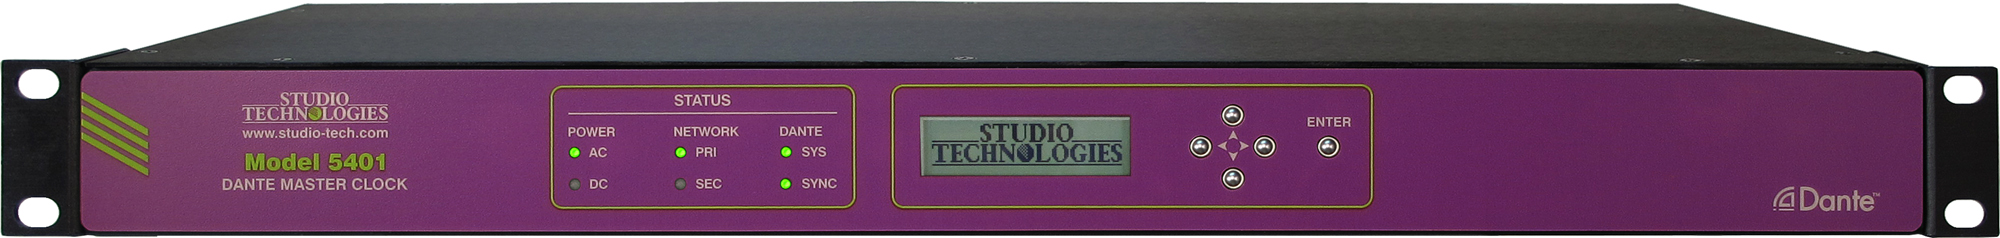 Nani vst. Studio Technologies m5482-01 Dante Bridge. Головка студио техника. TALLTECH Studio Страна производитель. Technol model 023016-1.